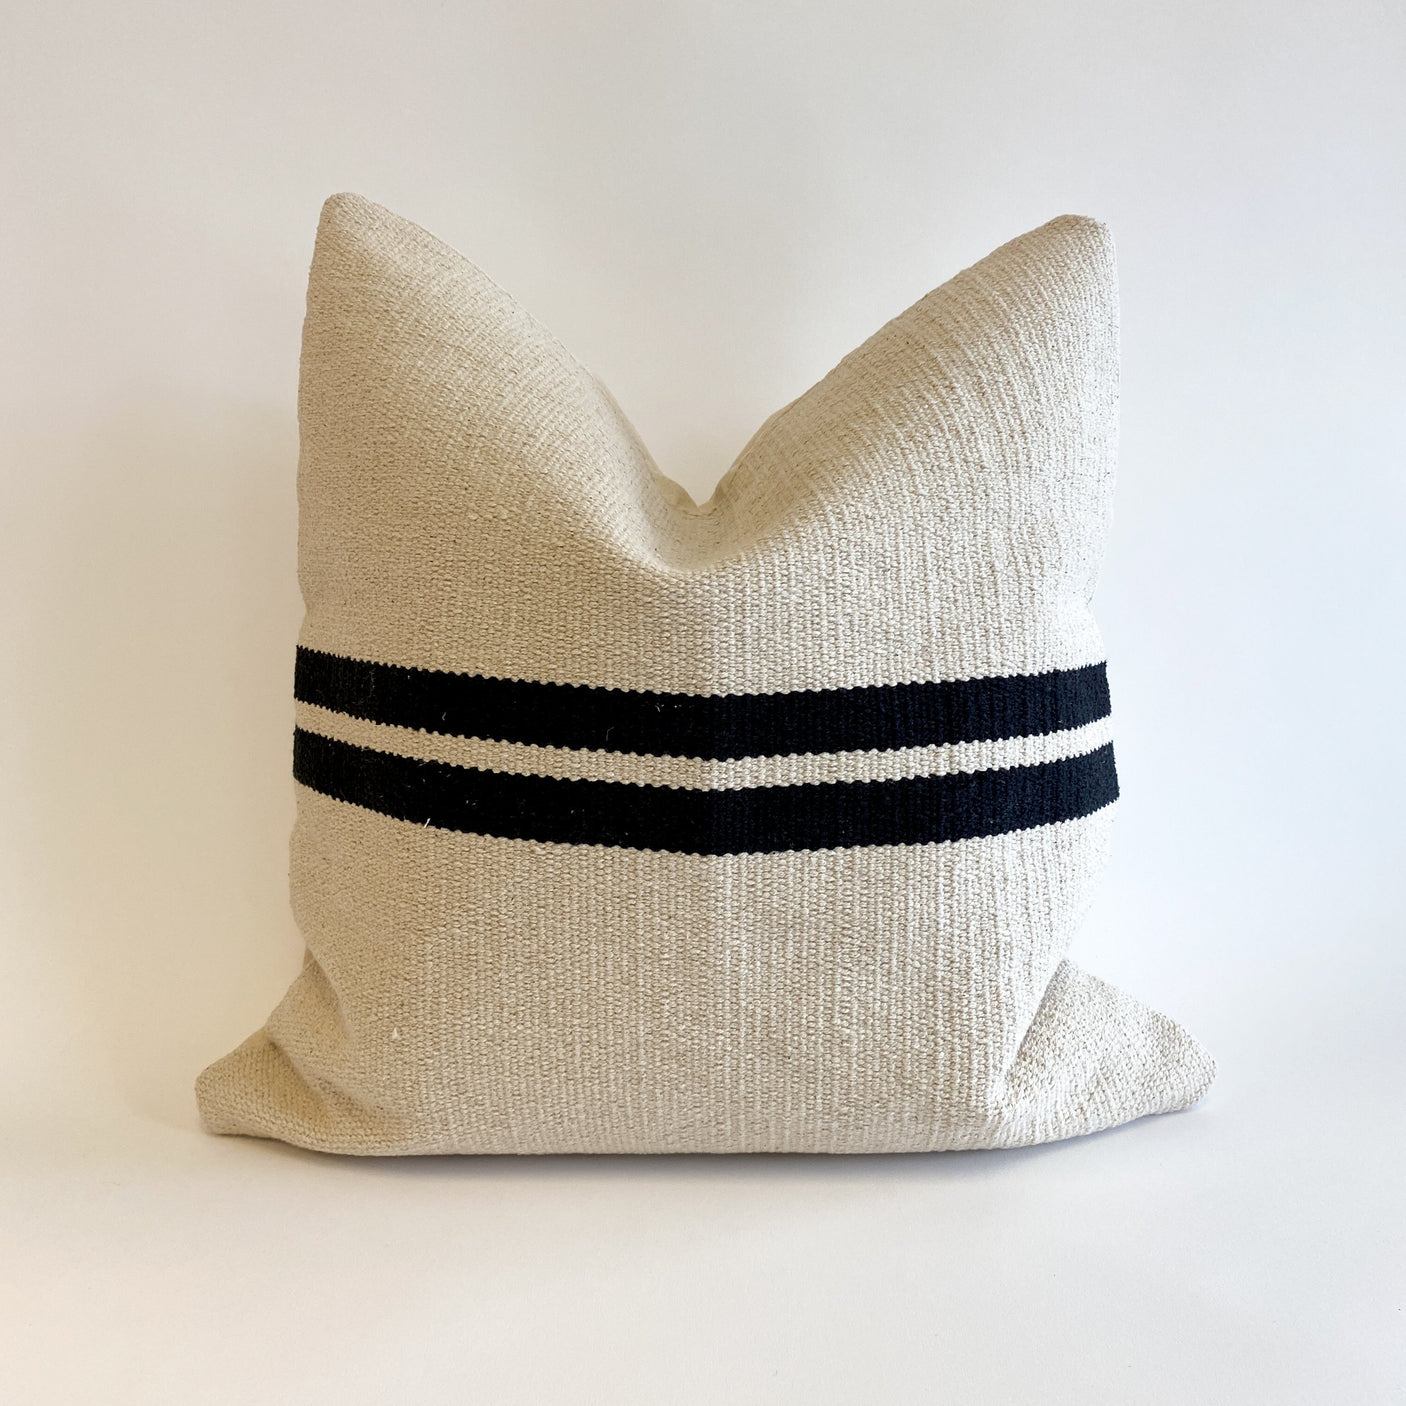 Ruhi Handwoven Black and Cream Pillow - The Loomia